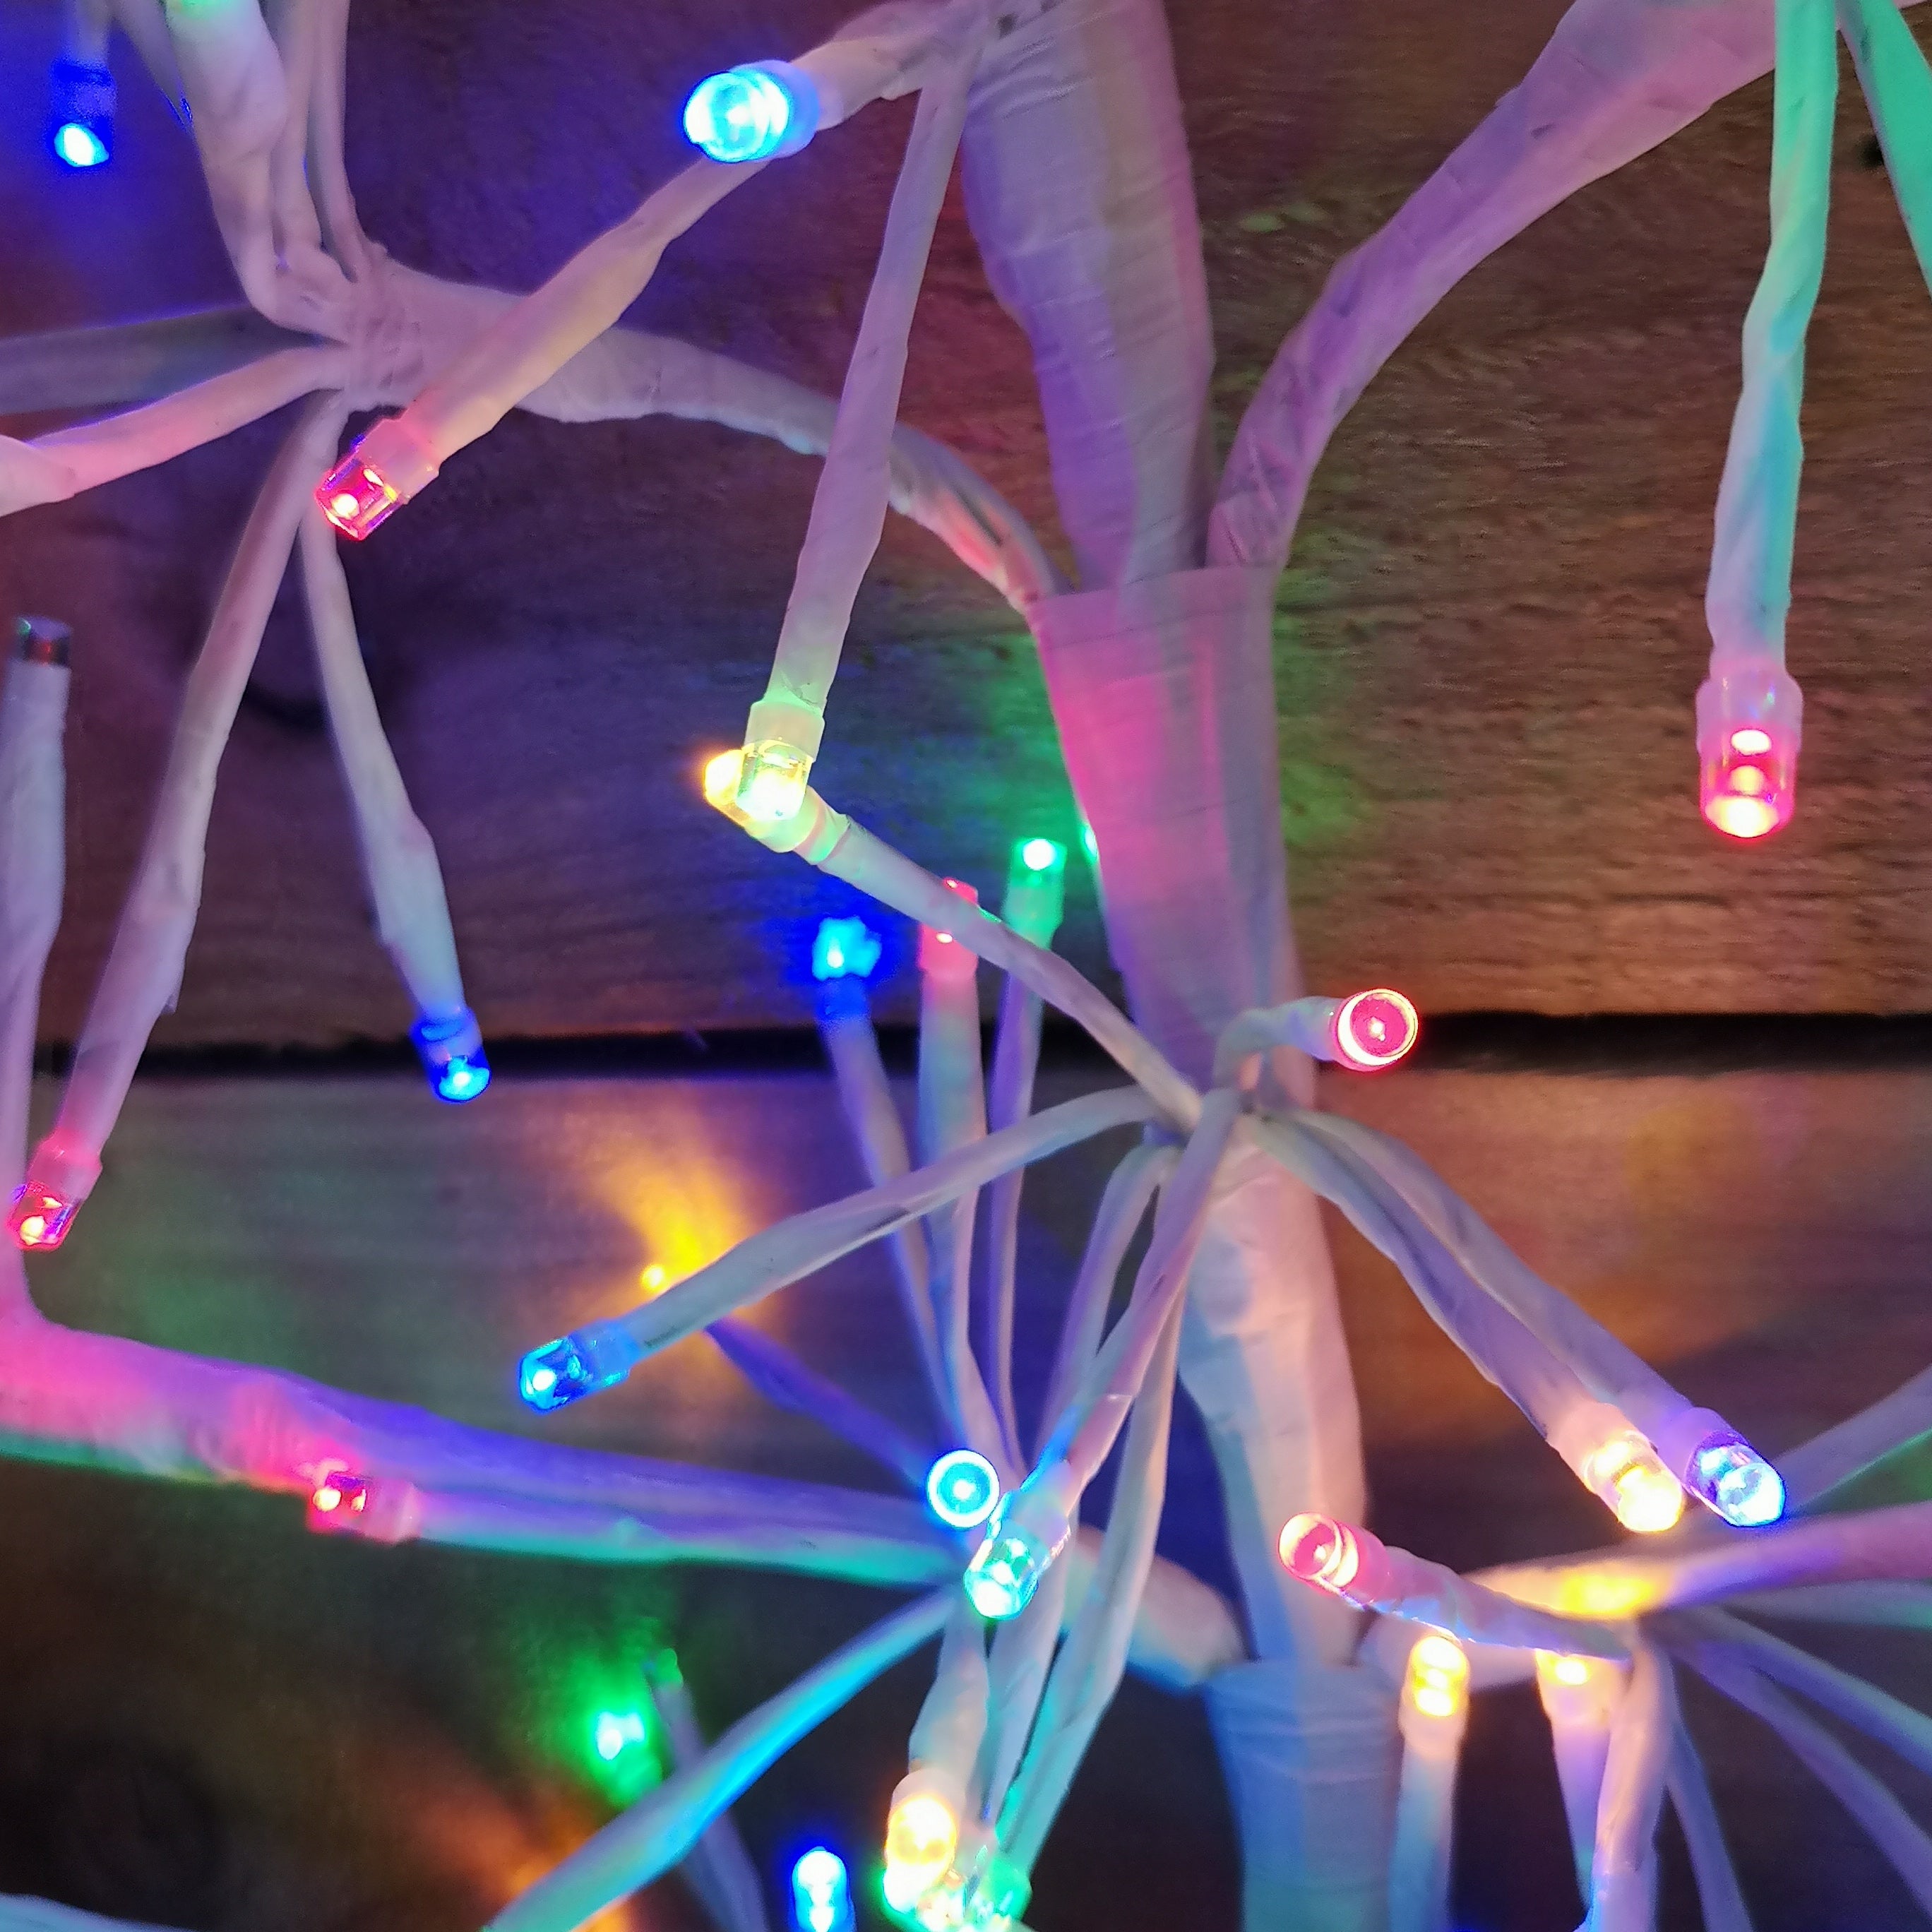 Premier Christmas 60cm Twinkling Starburst Tree - Multicoloured & Amber